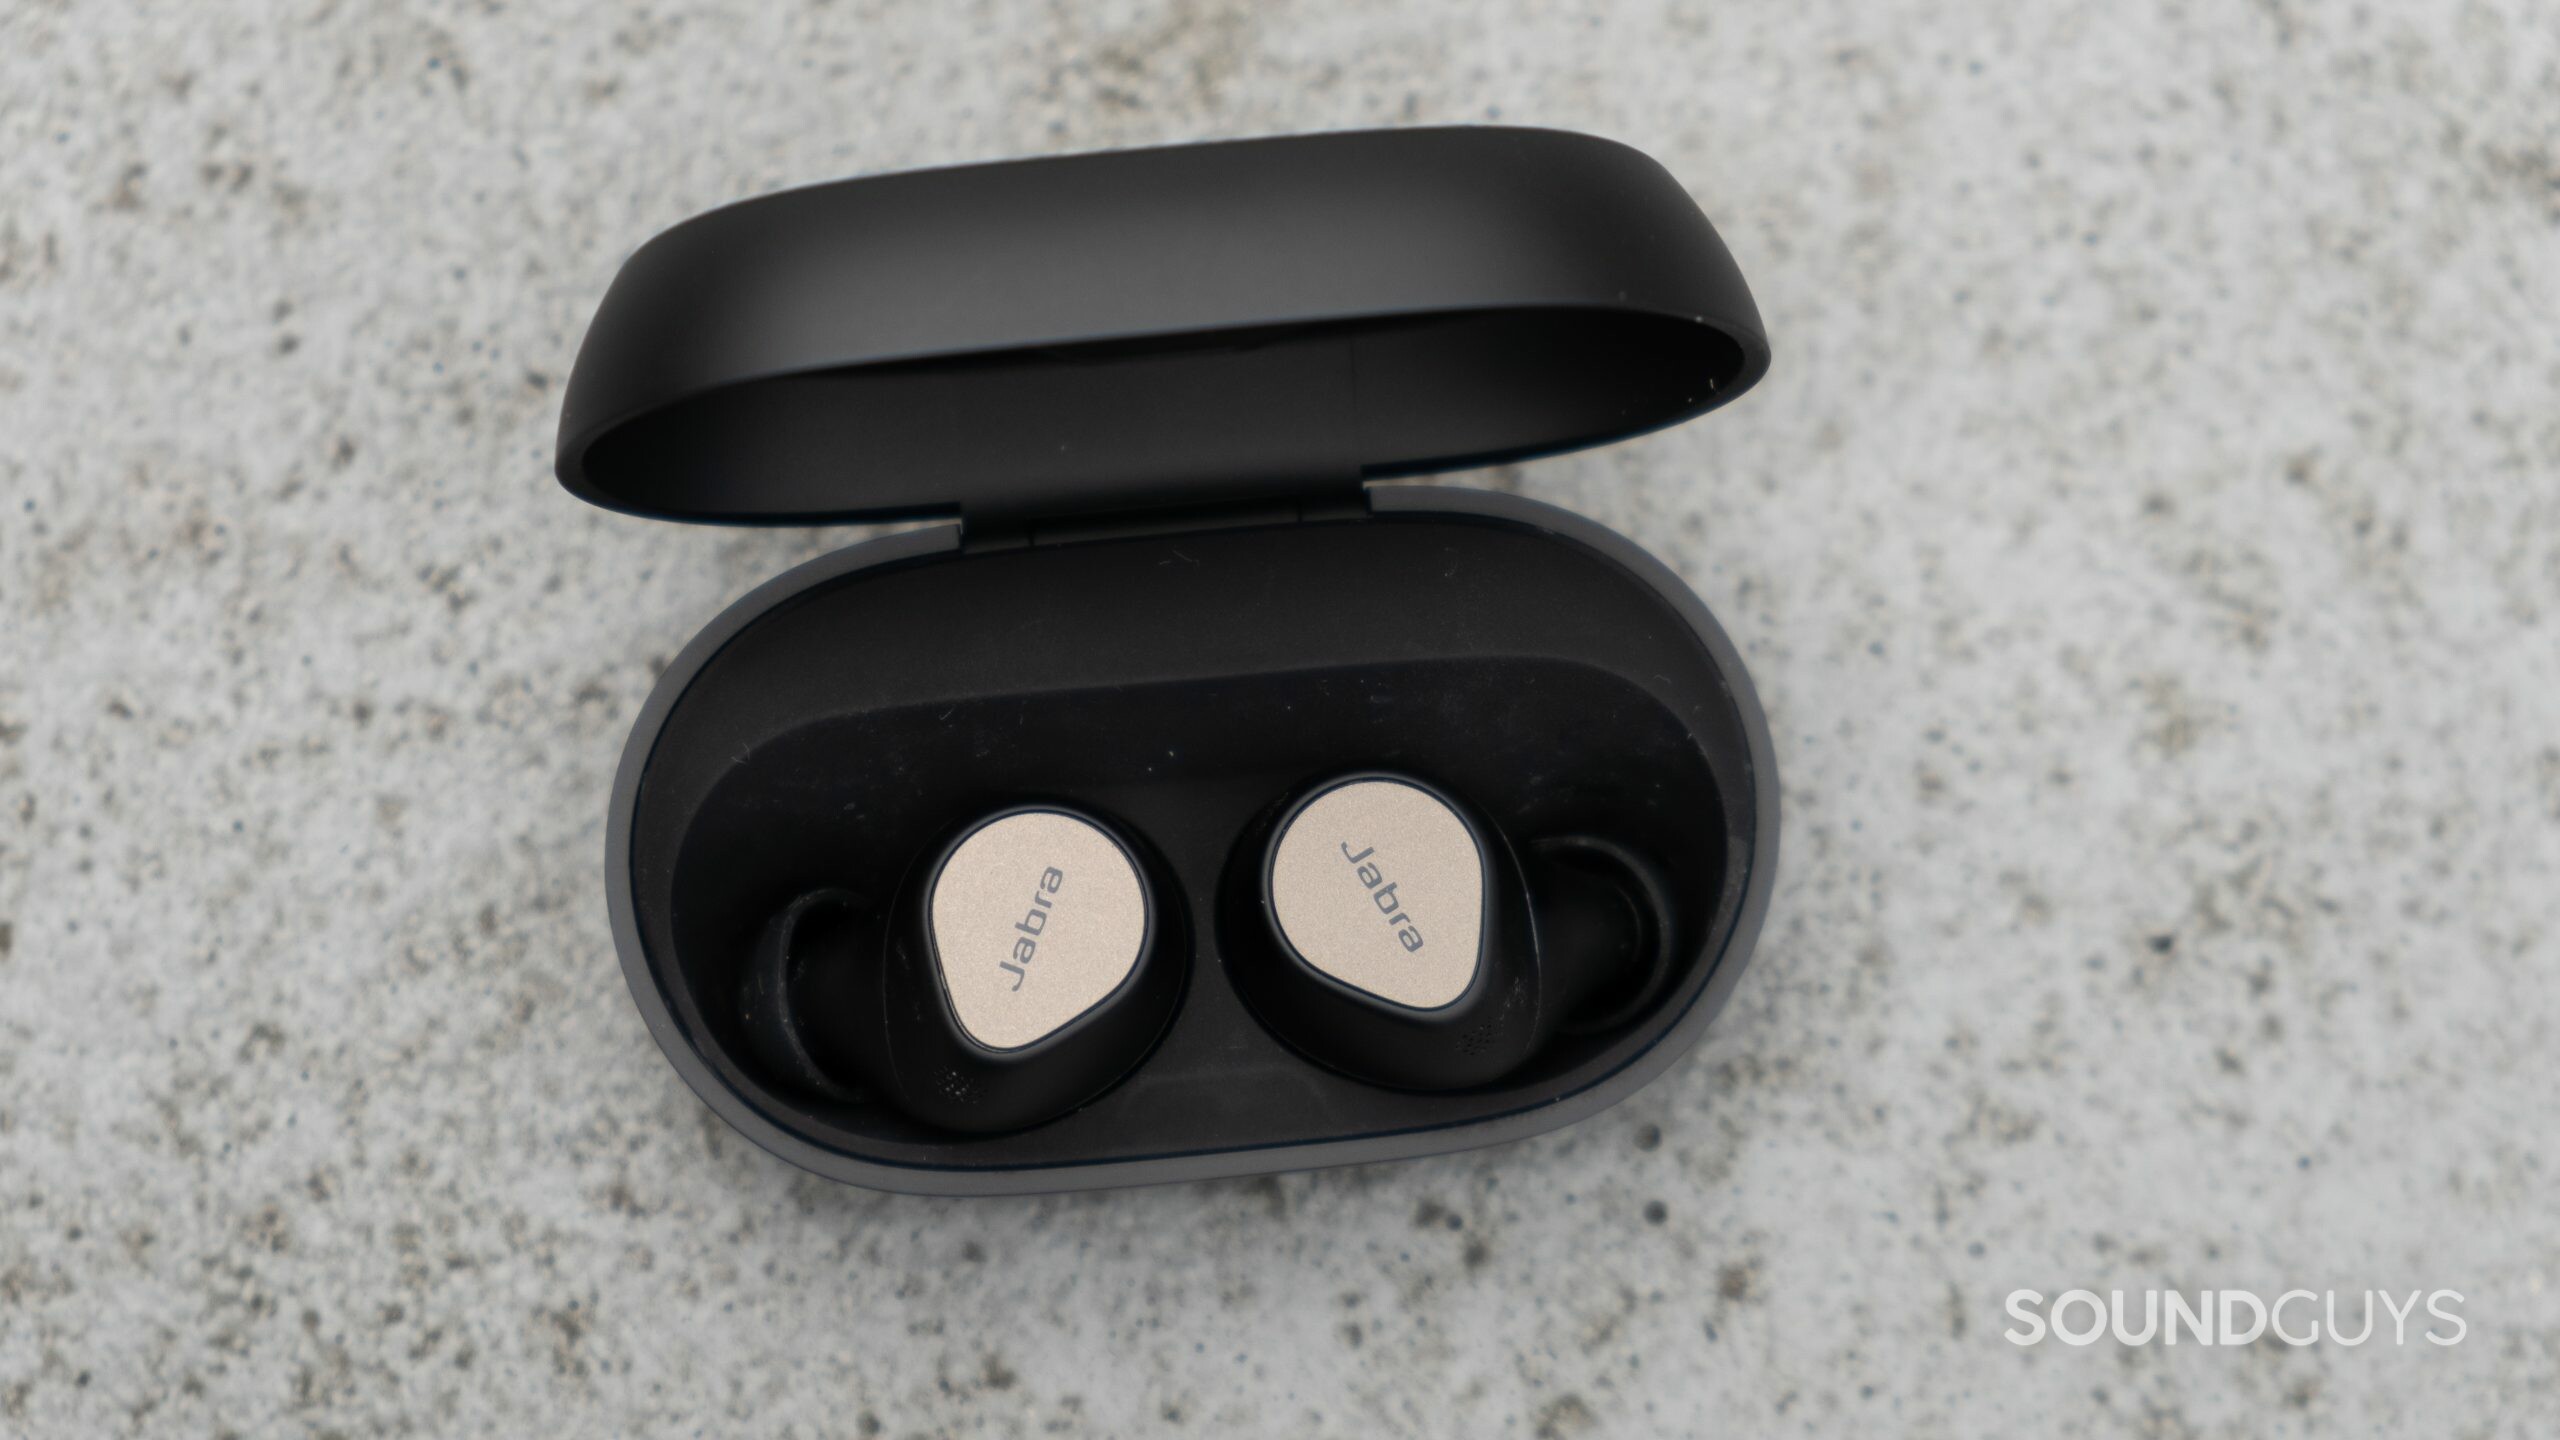 Jabra Elite 7 Pro Headphone Review - Consumer Reports